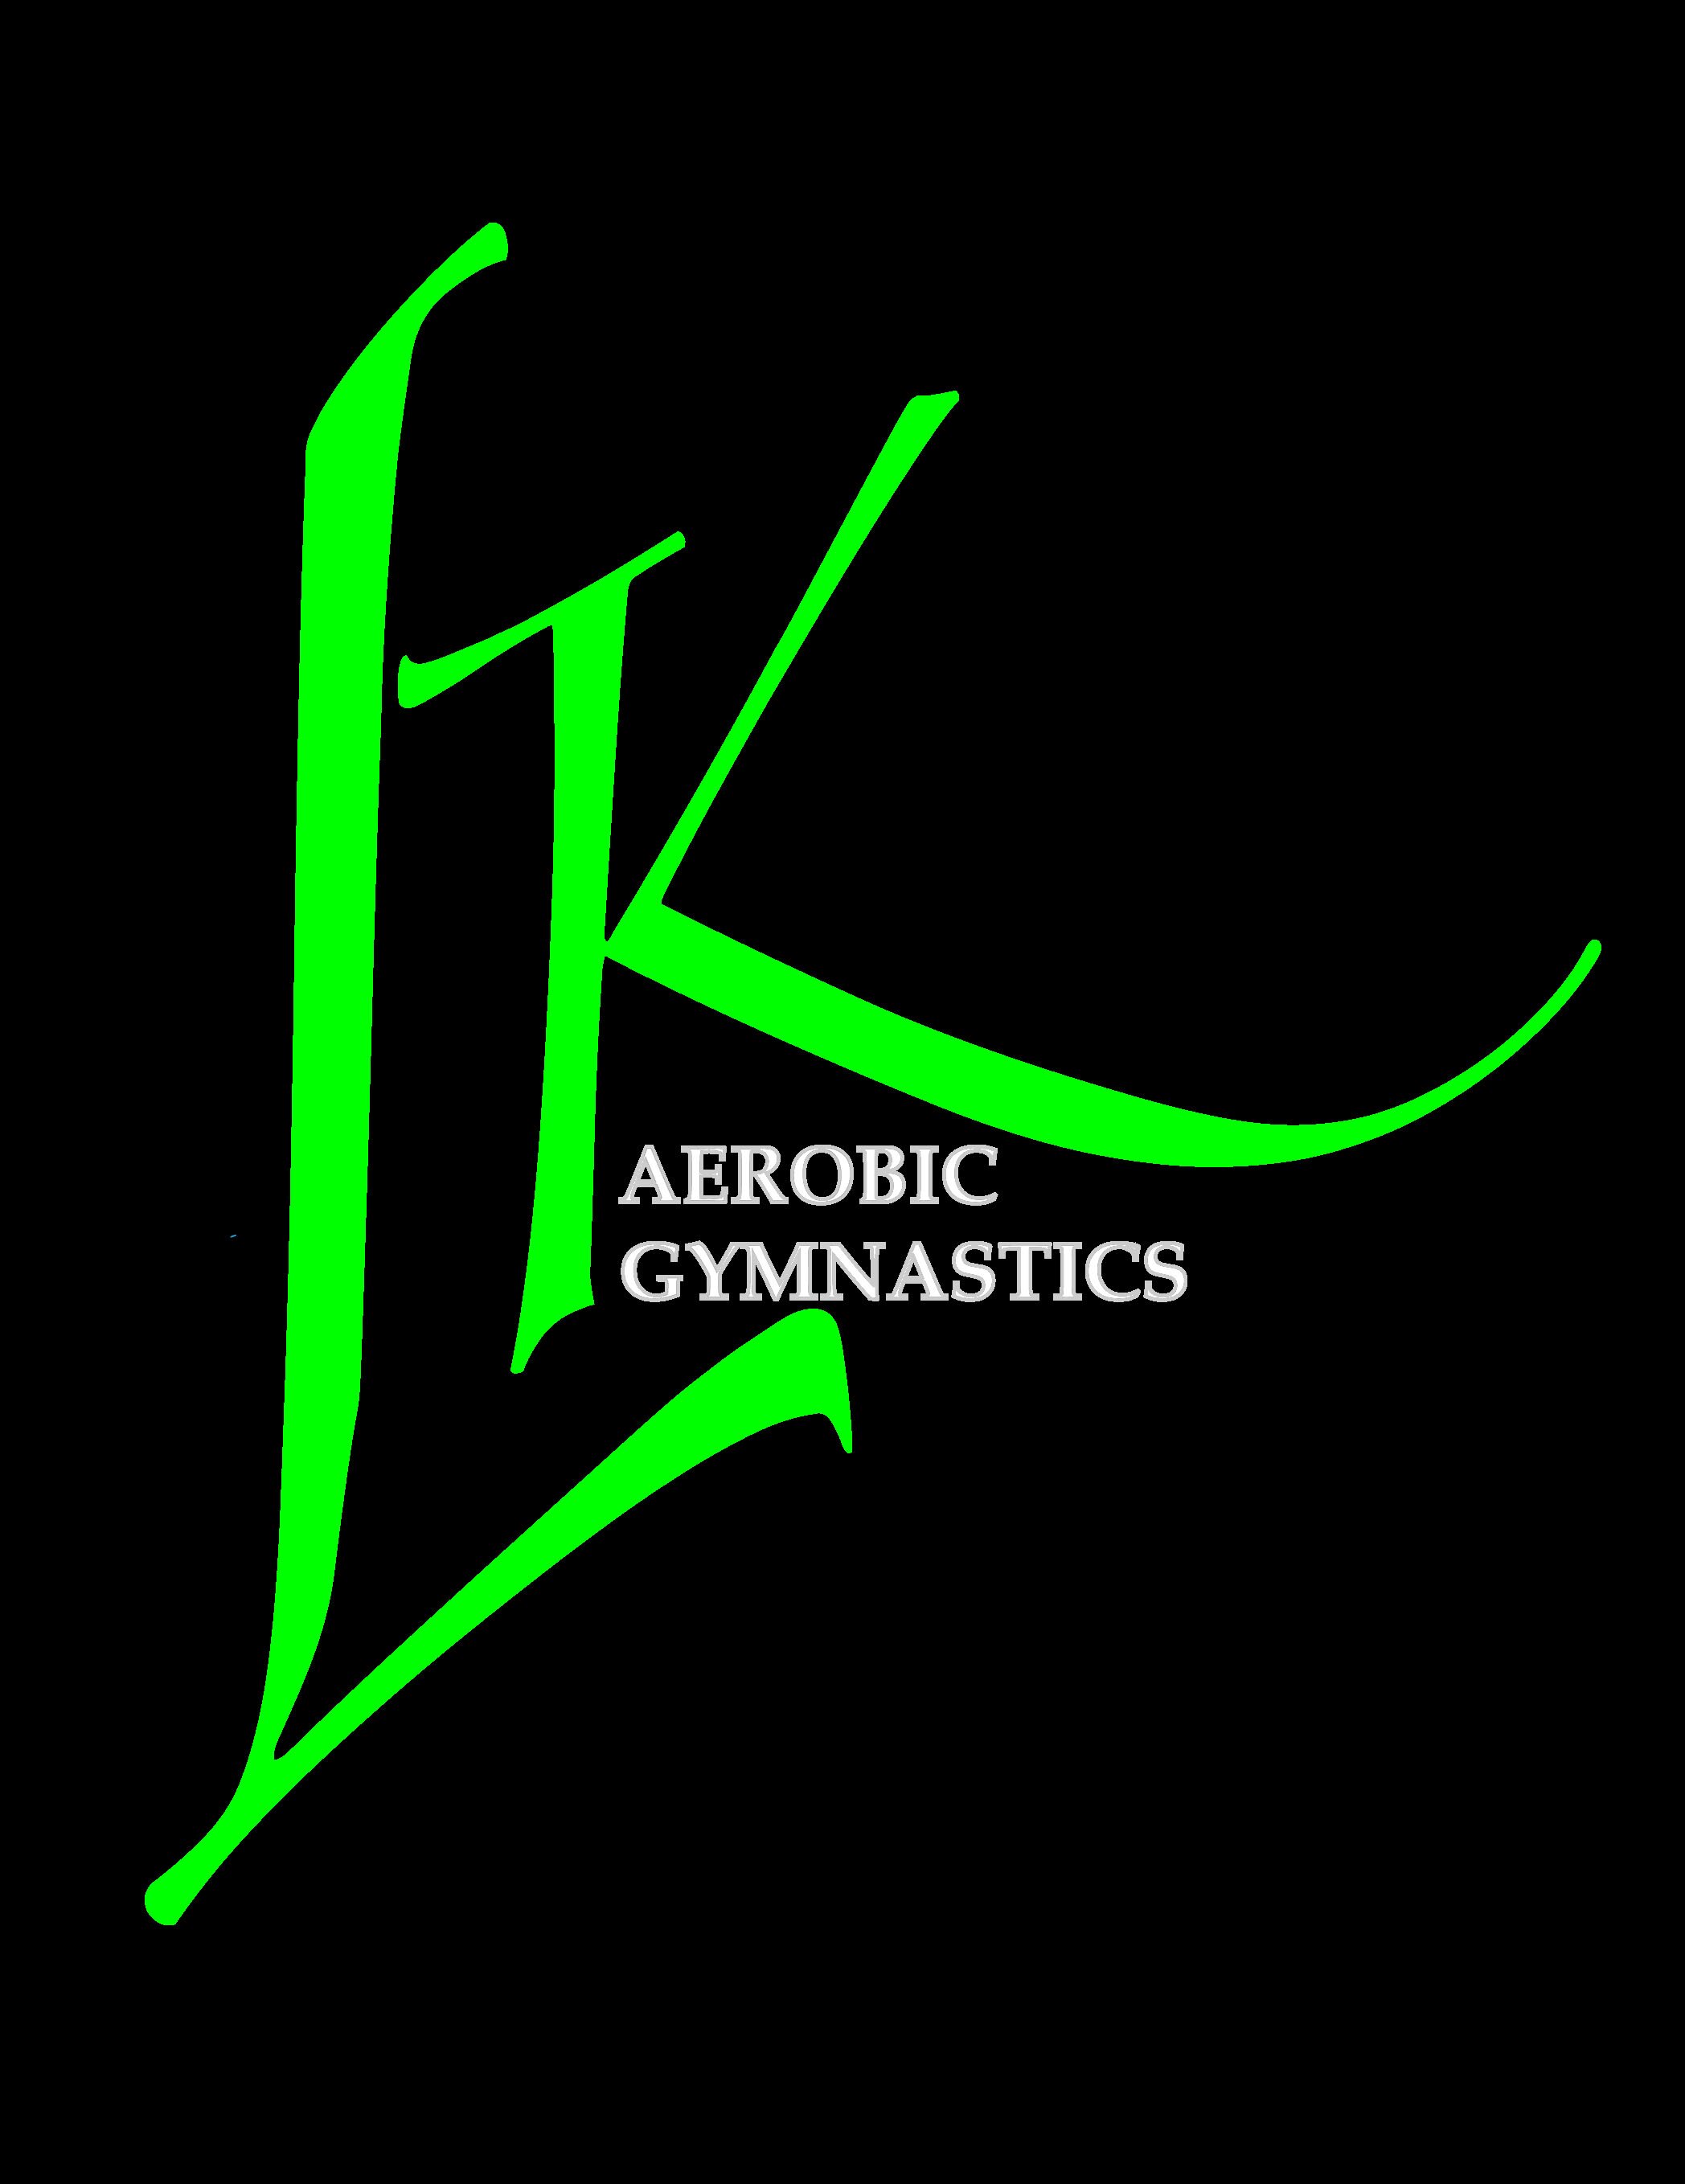 LK AerobicGymnastics